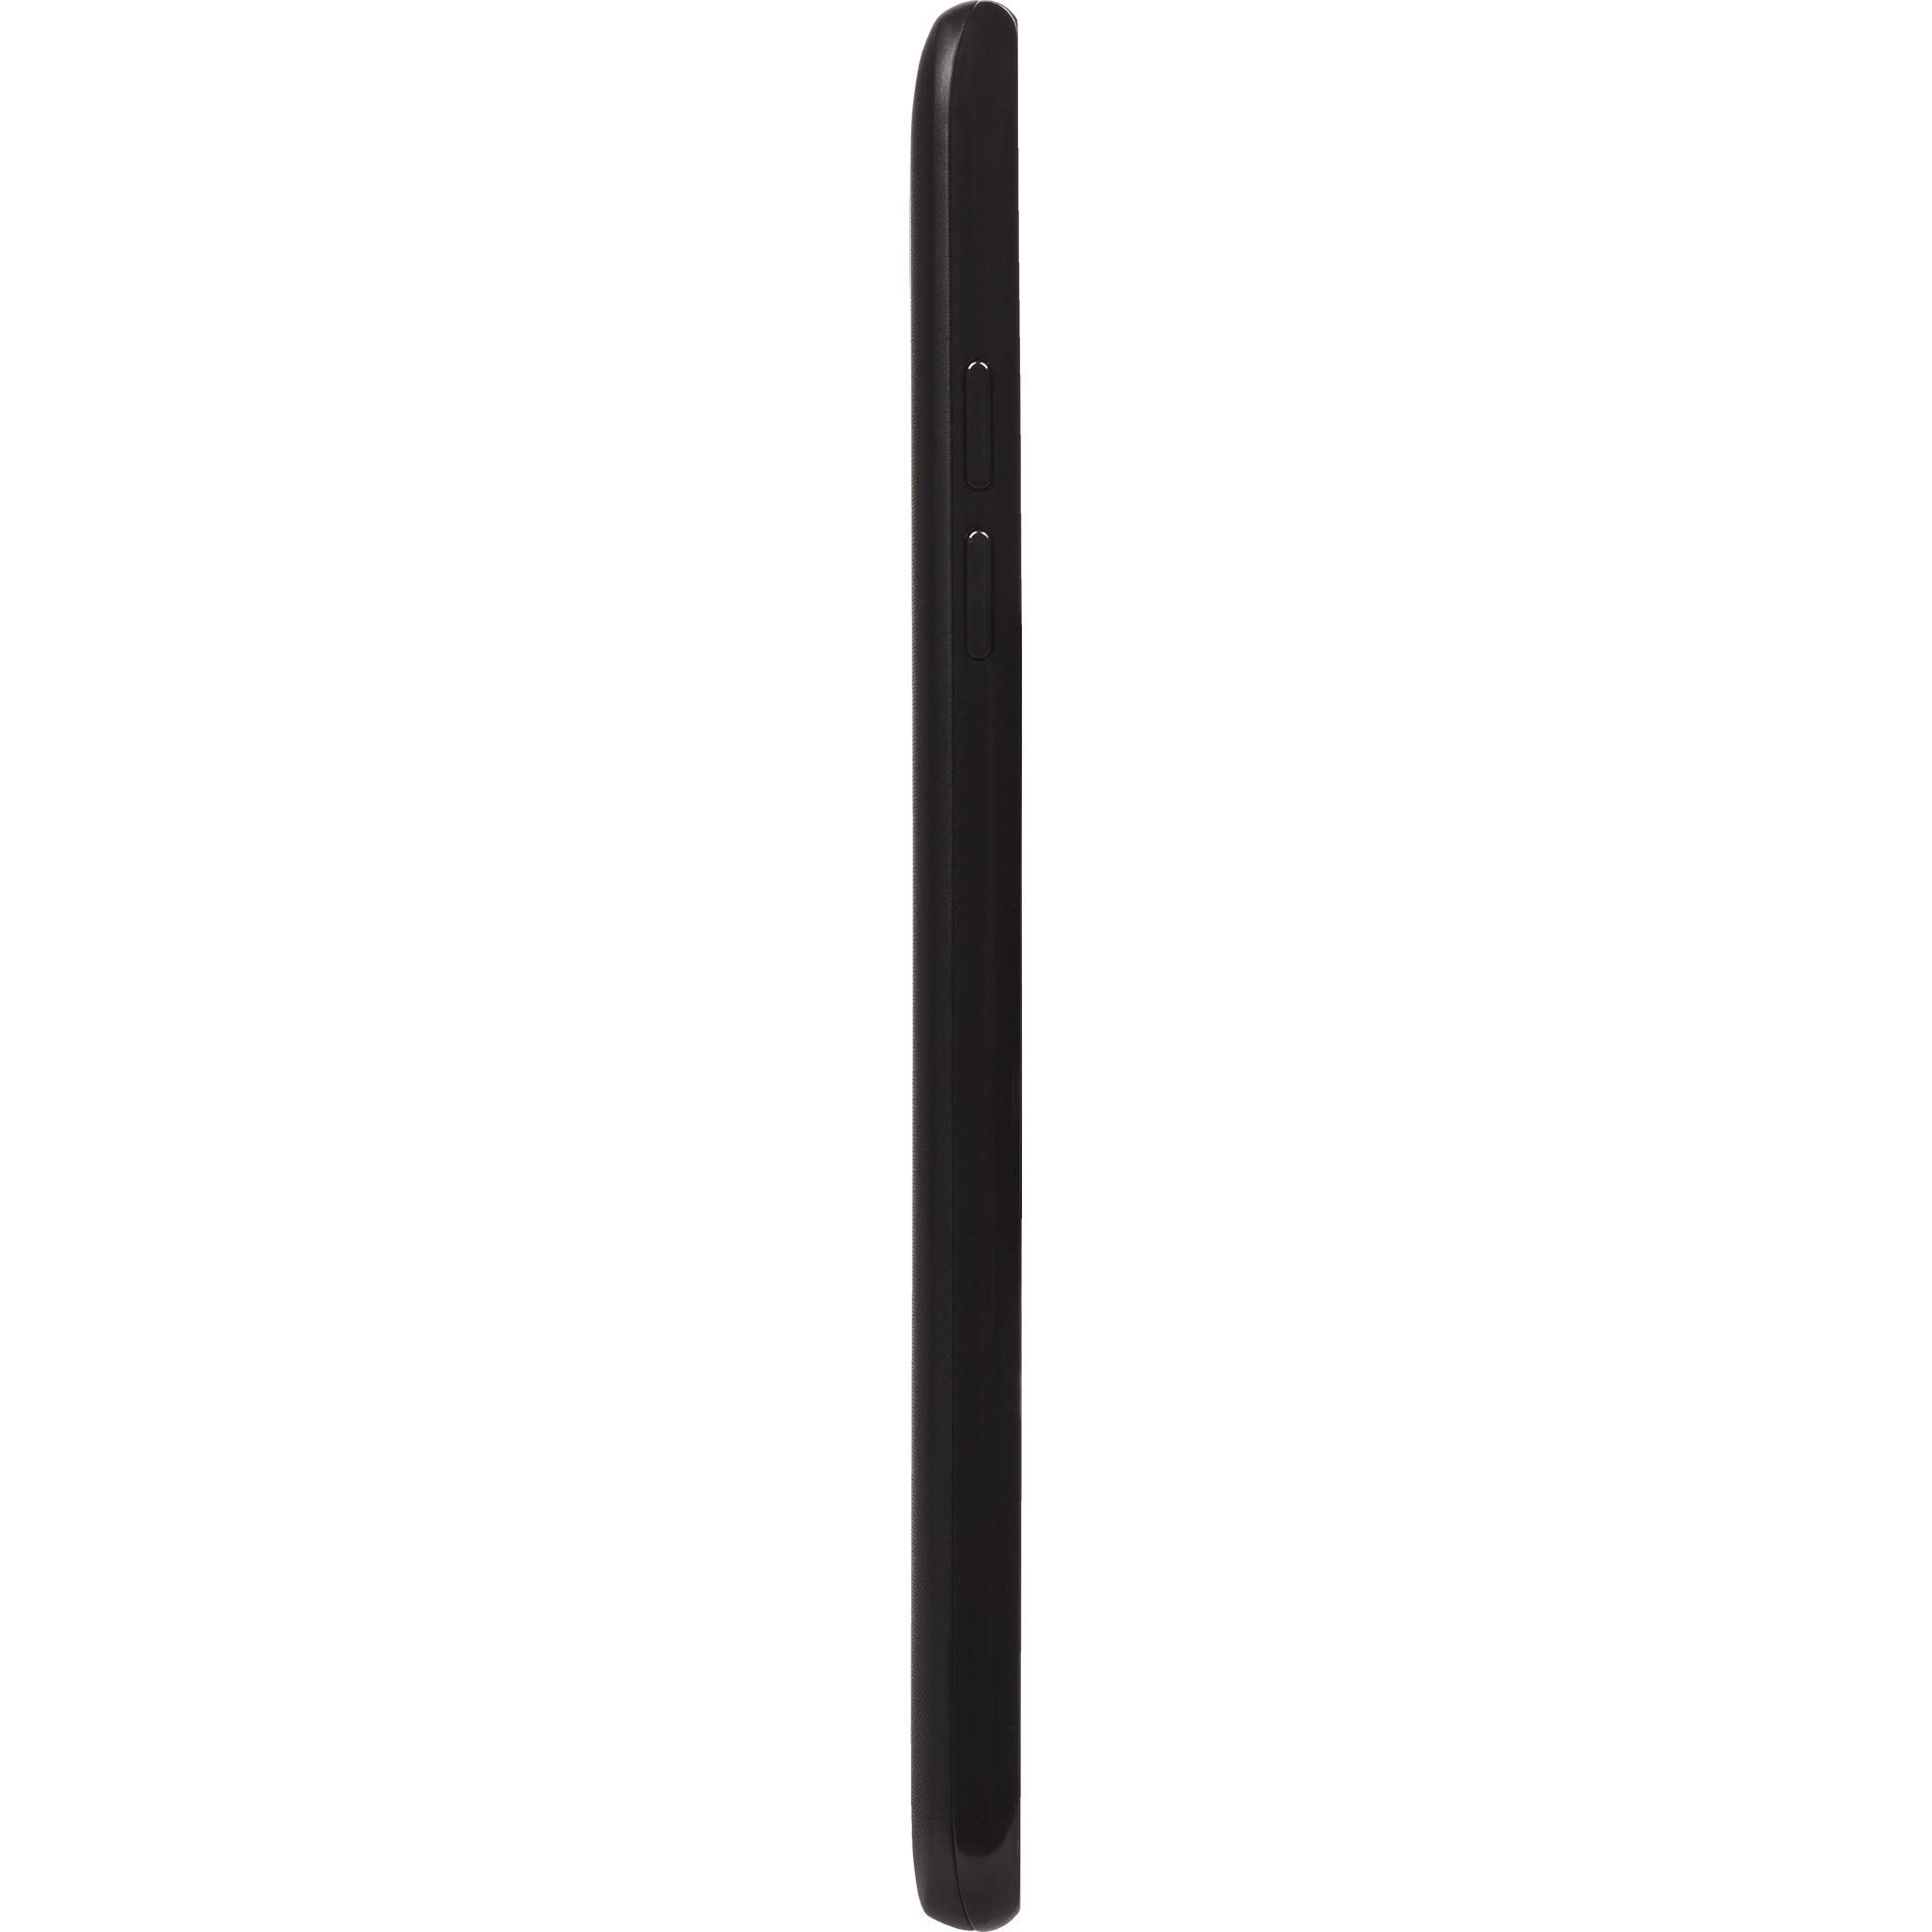 Tracfone Carrier-Locked LG Rebel 4 4G LTE Prepaid Smartphone - Black - 16GB - Sim Card Included - CDMA, Standart